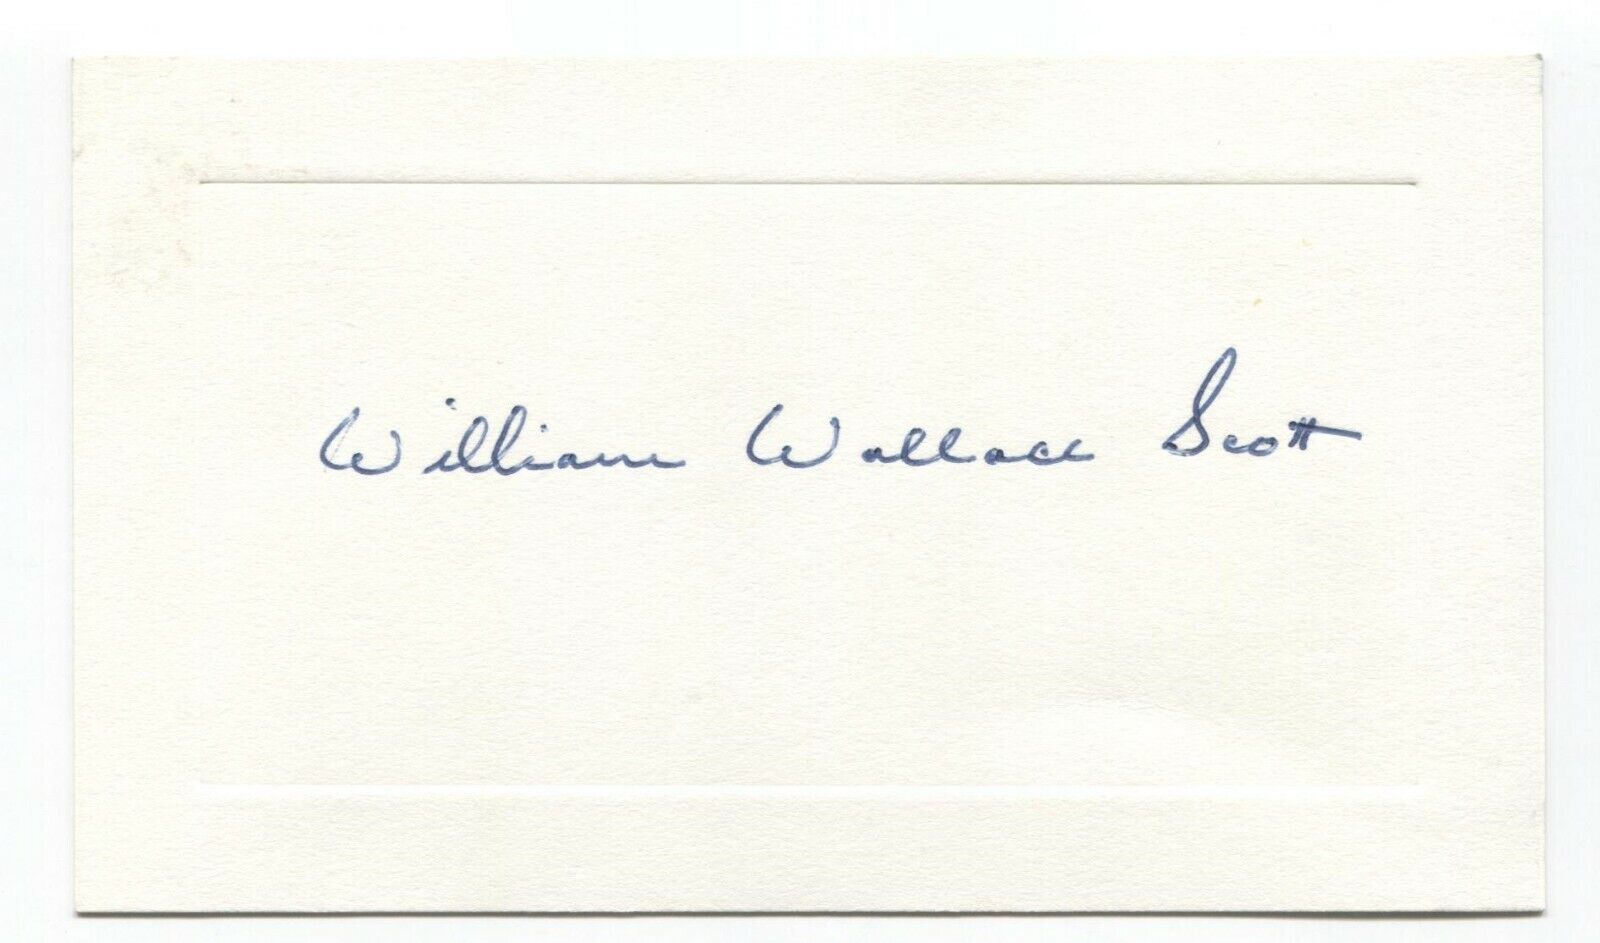 William W. Scott Signed Letter Autographed Signature Doctor Surgeon Urologist